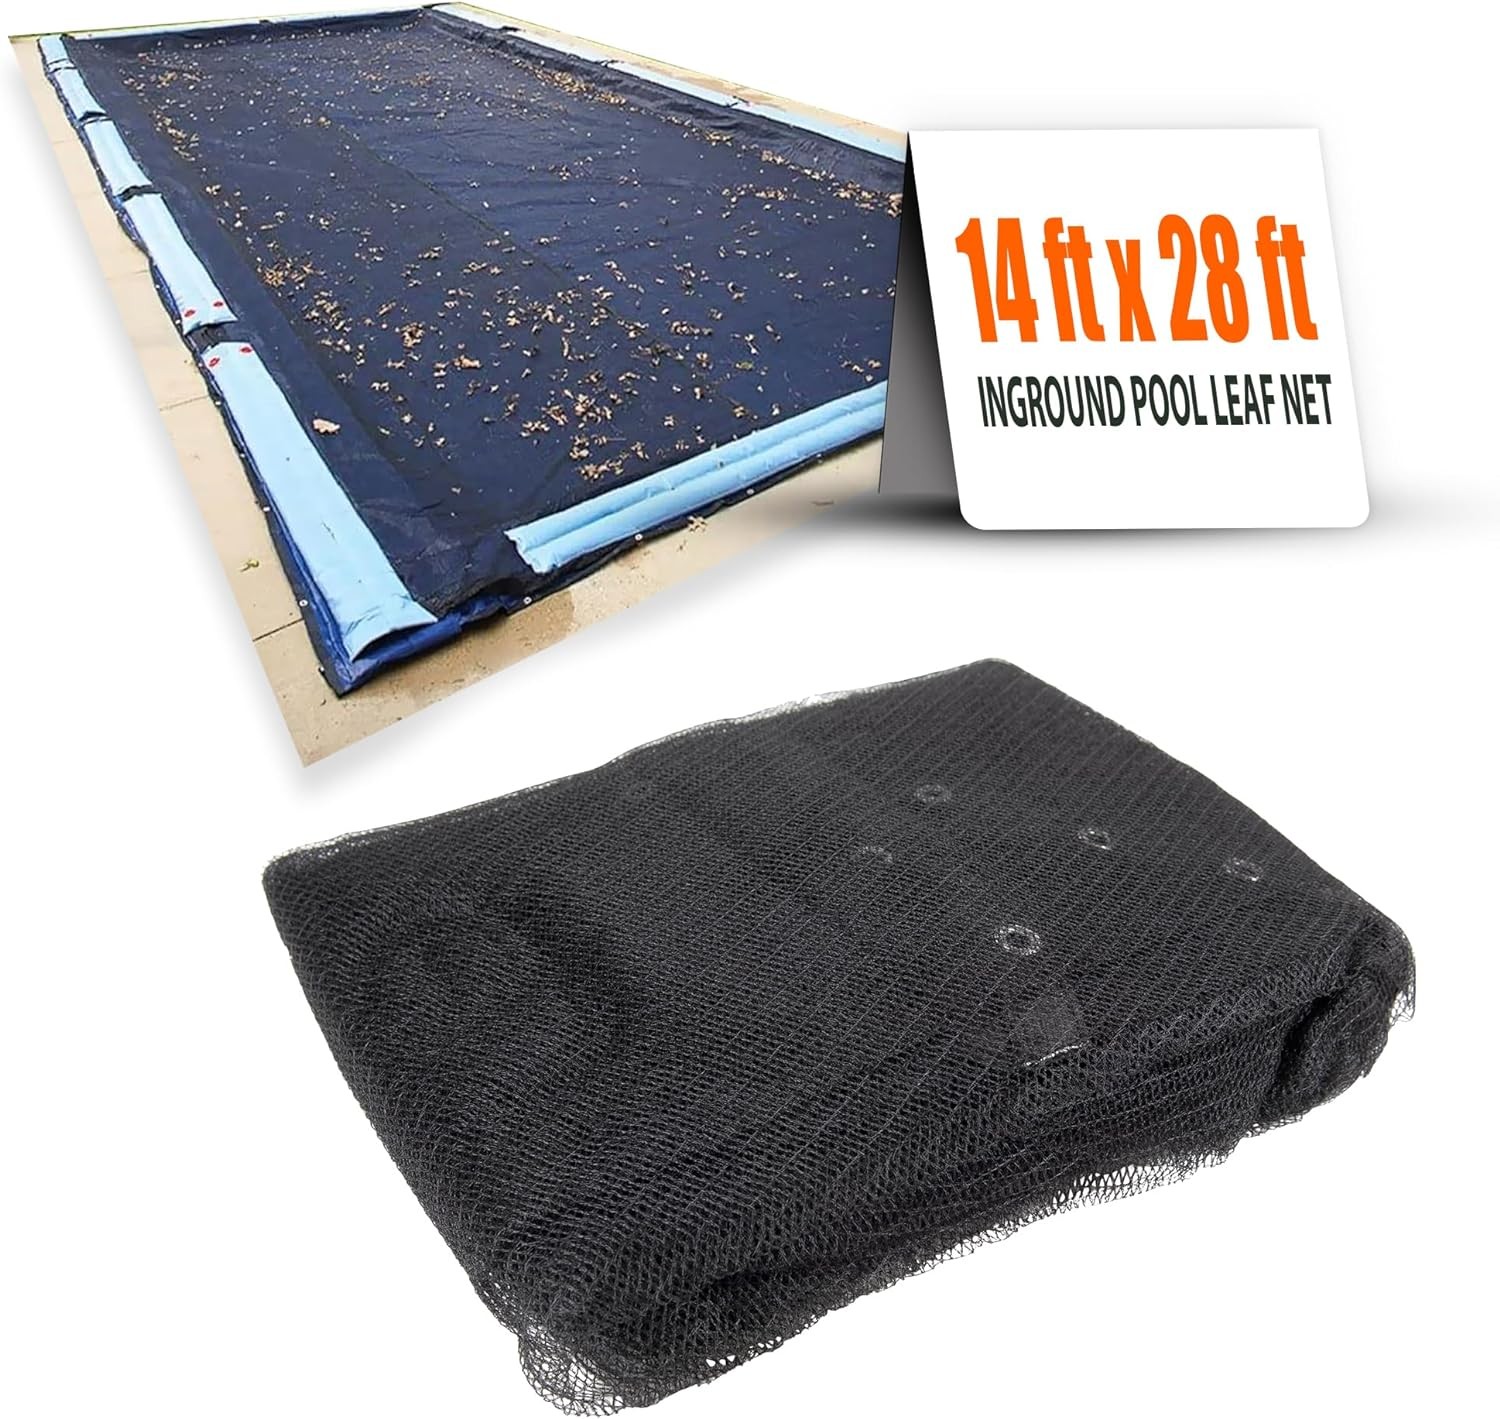 SET Sunsolar Energy Technologies Leaf Net Cover for 14 ft x 28 ft Rectangular Inground Swimming Pool with Extra 4 ft Overlap